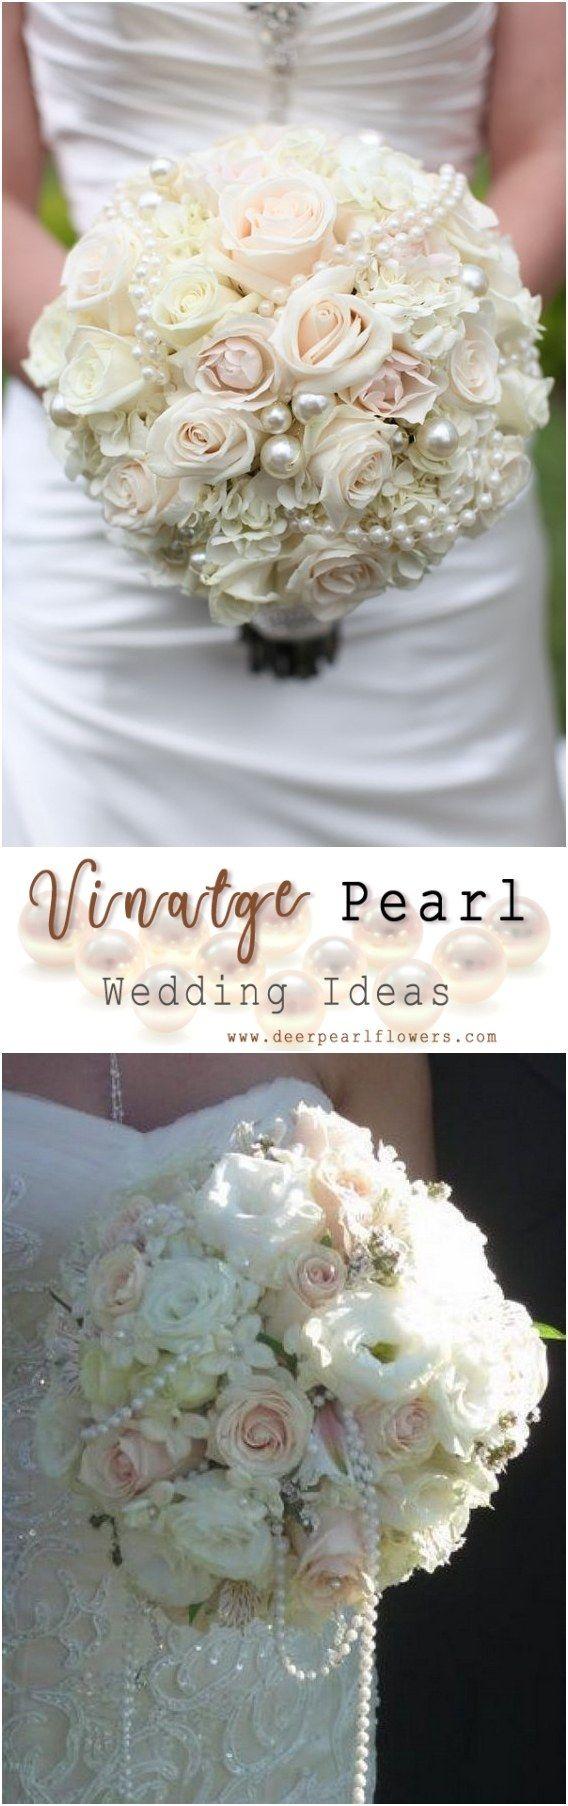 زفاف - 35 Chic Vintage Pearl Wedding Ideas You’ll Love